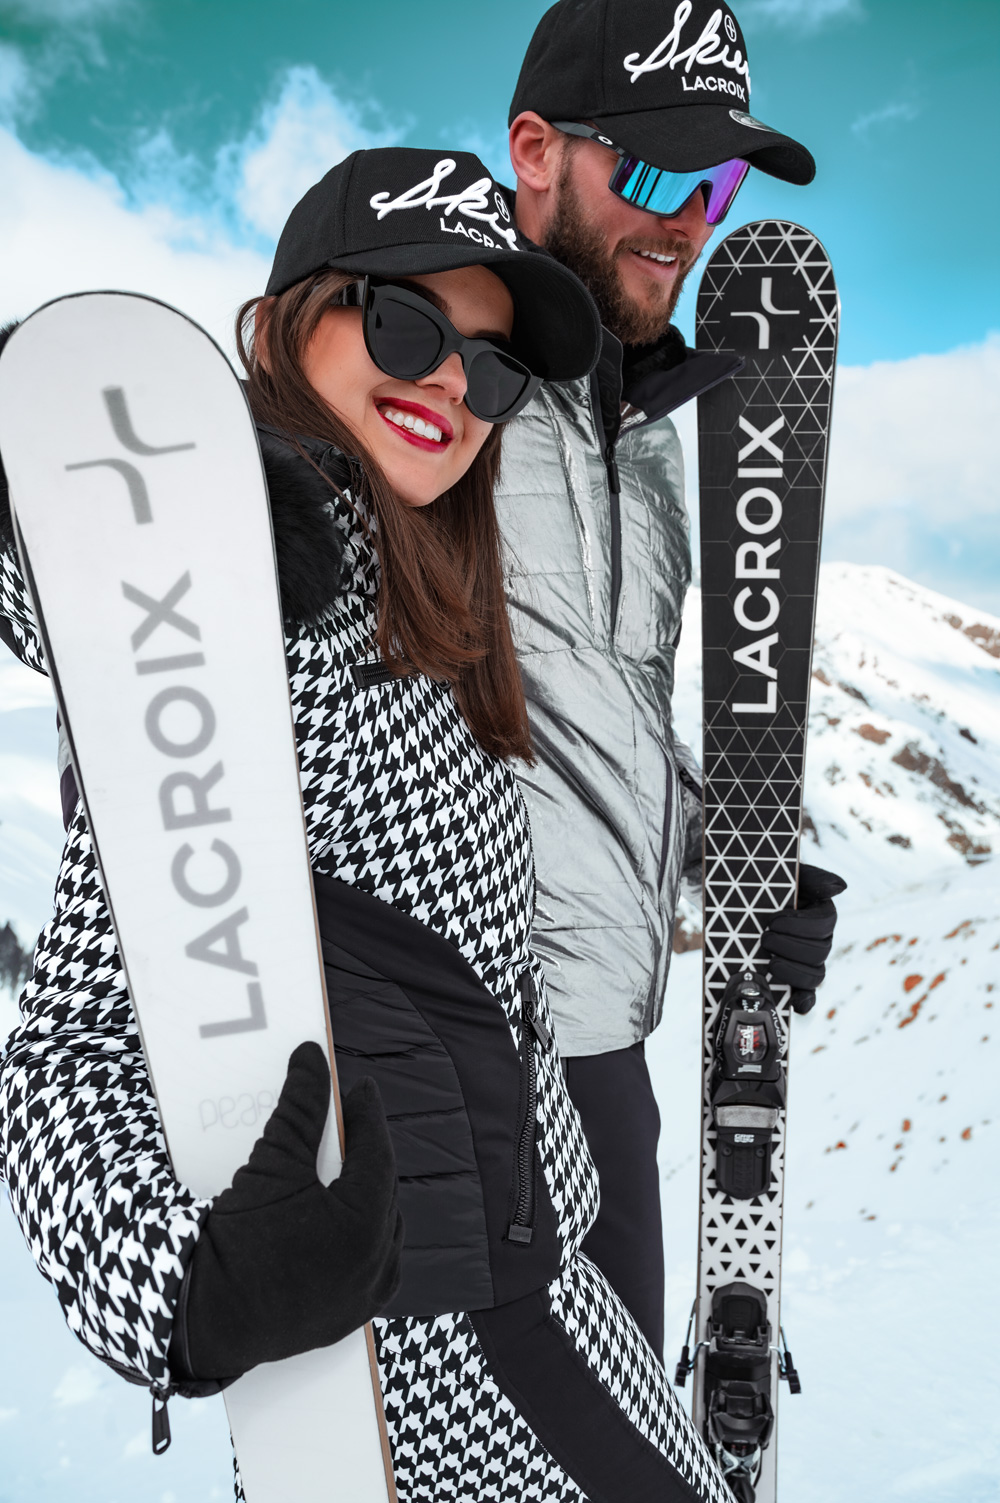 Žhavá novinka lyže Lacroix ve SKIMAX